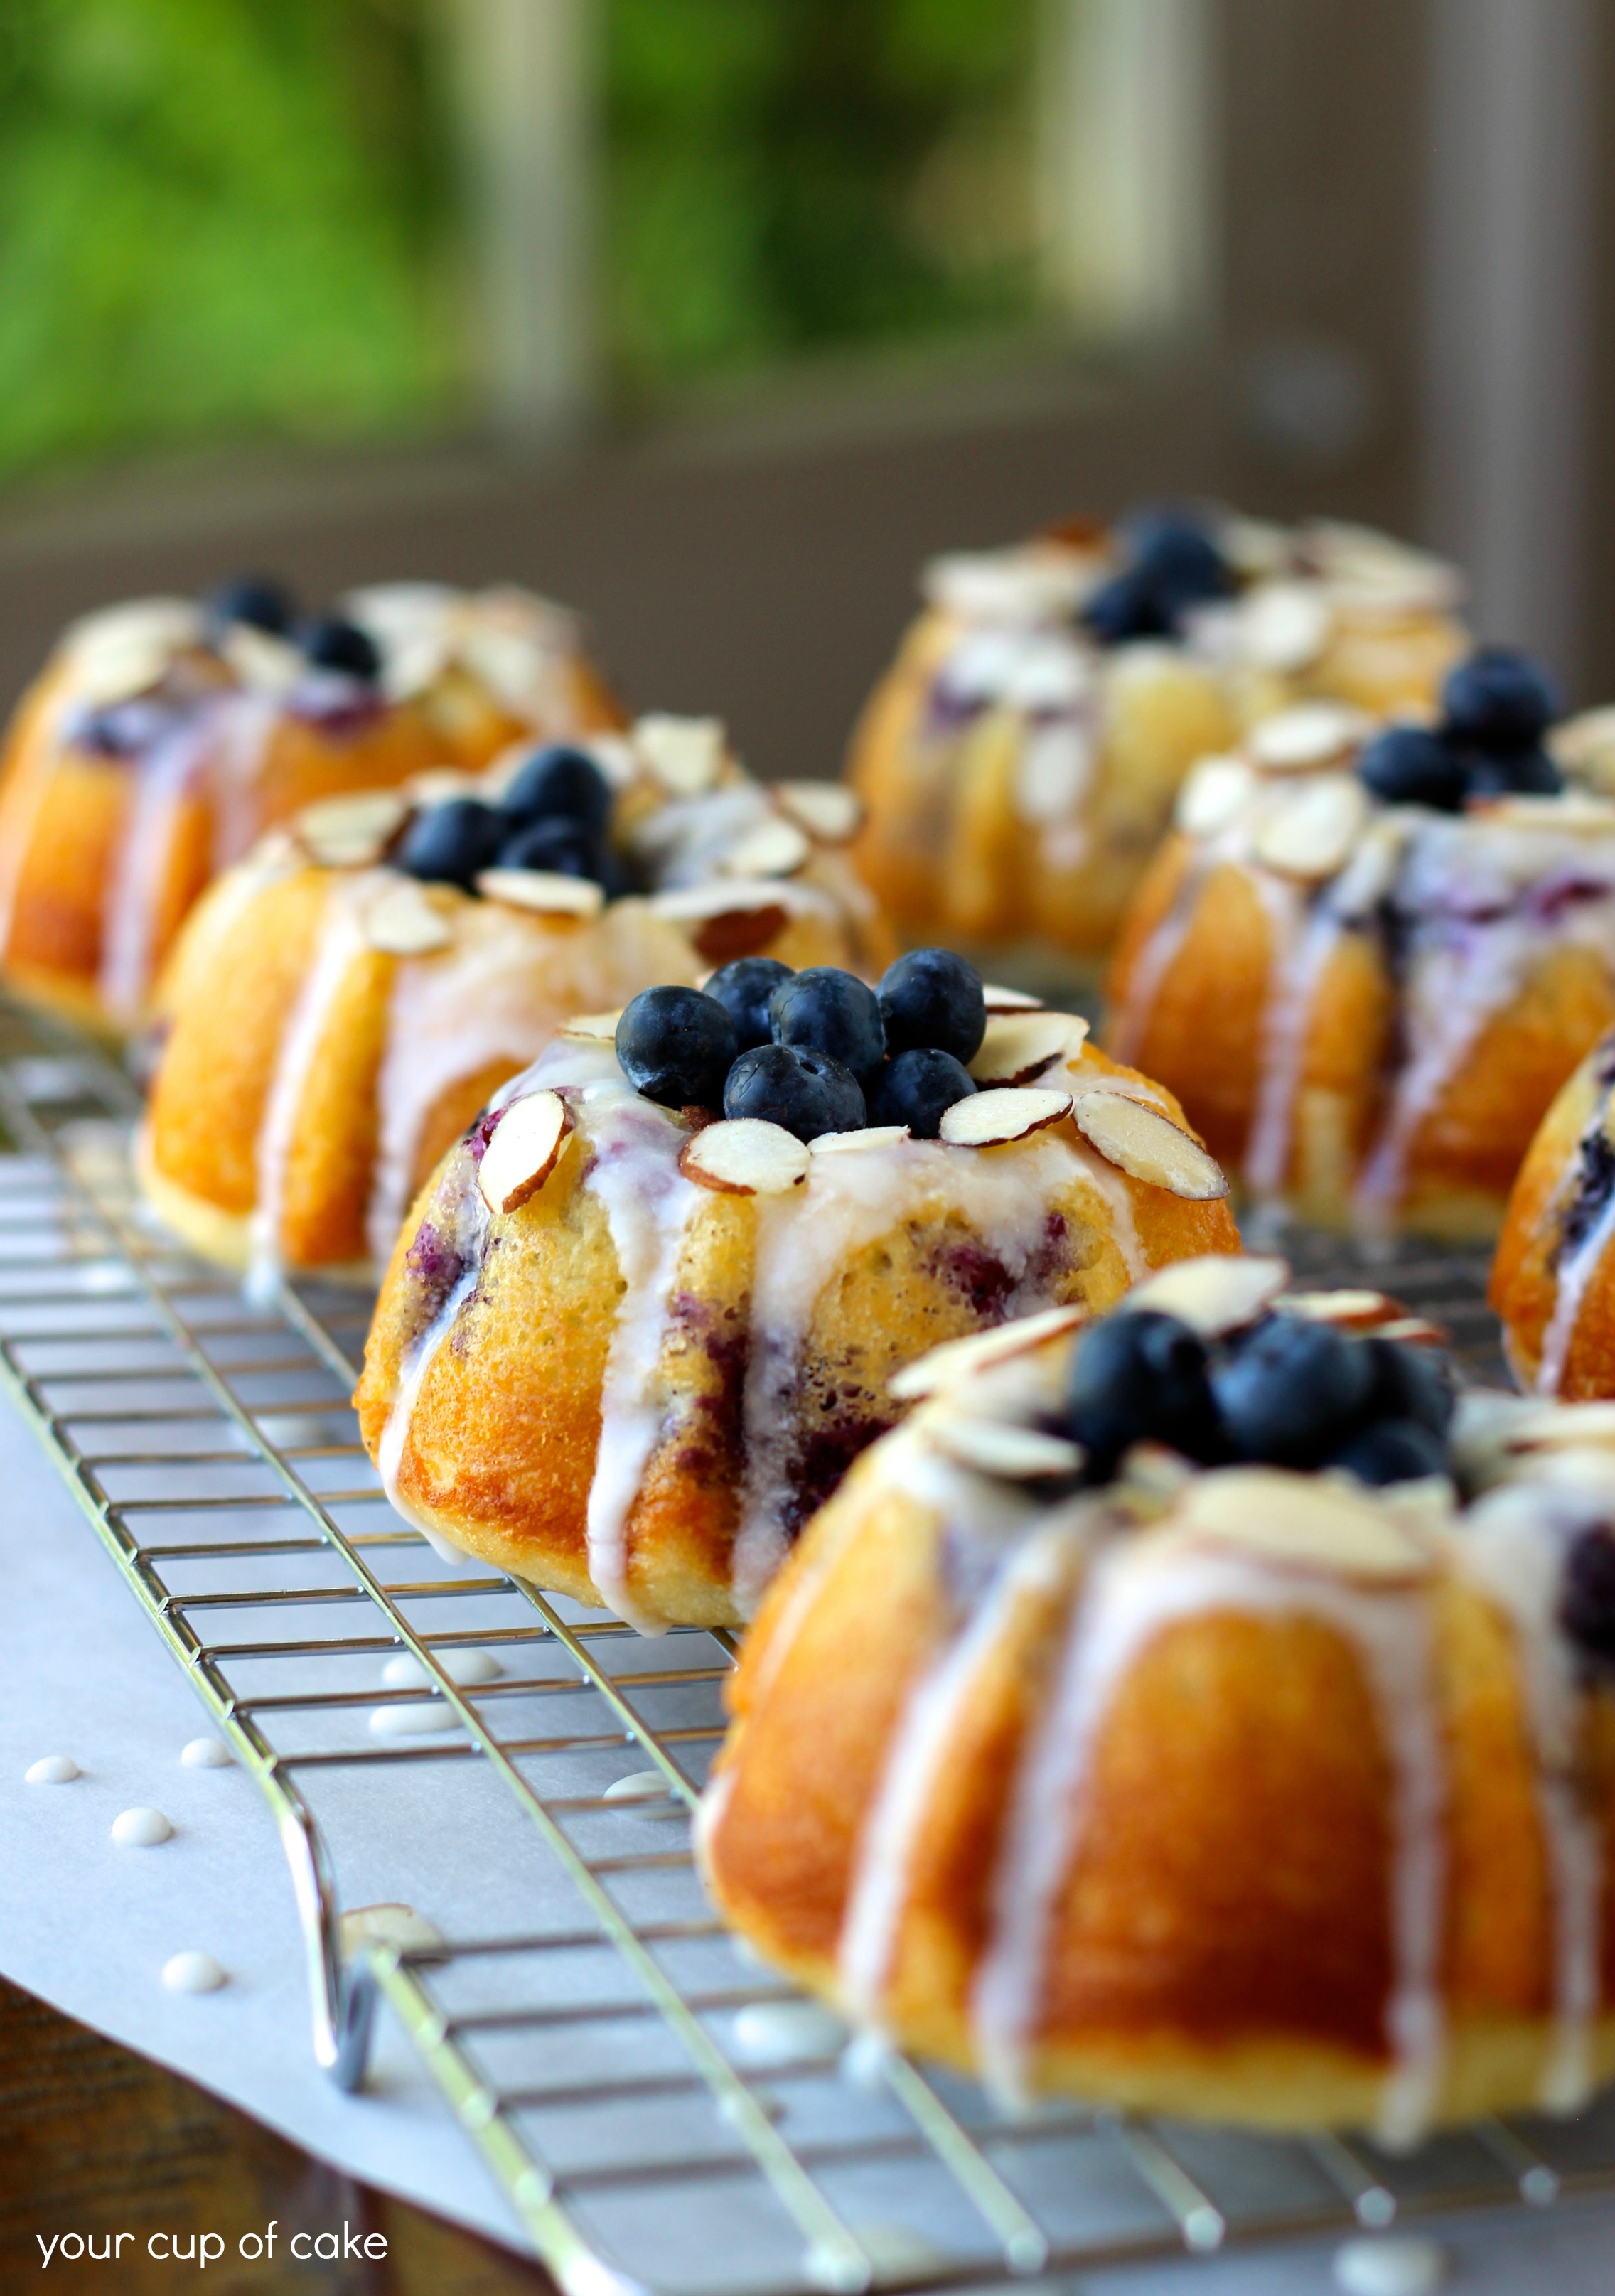 https://www.yourcupofcake.com/wp-content/uploads/2013/06/Blueberry-Almond-Mini-Bundt-Cakes.jpg